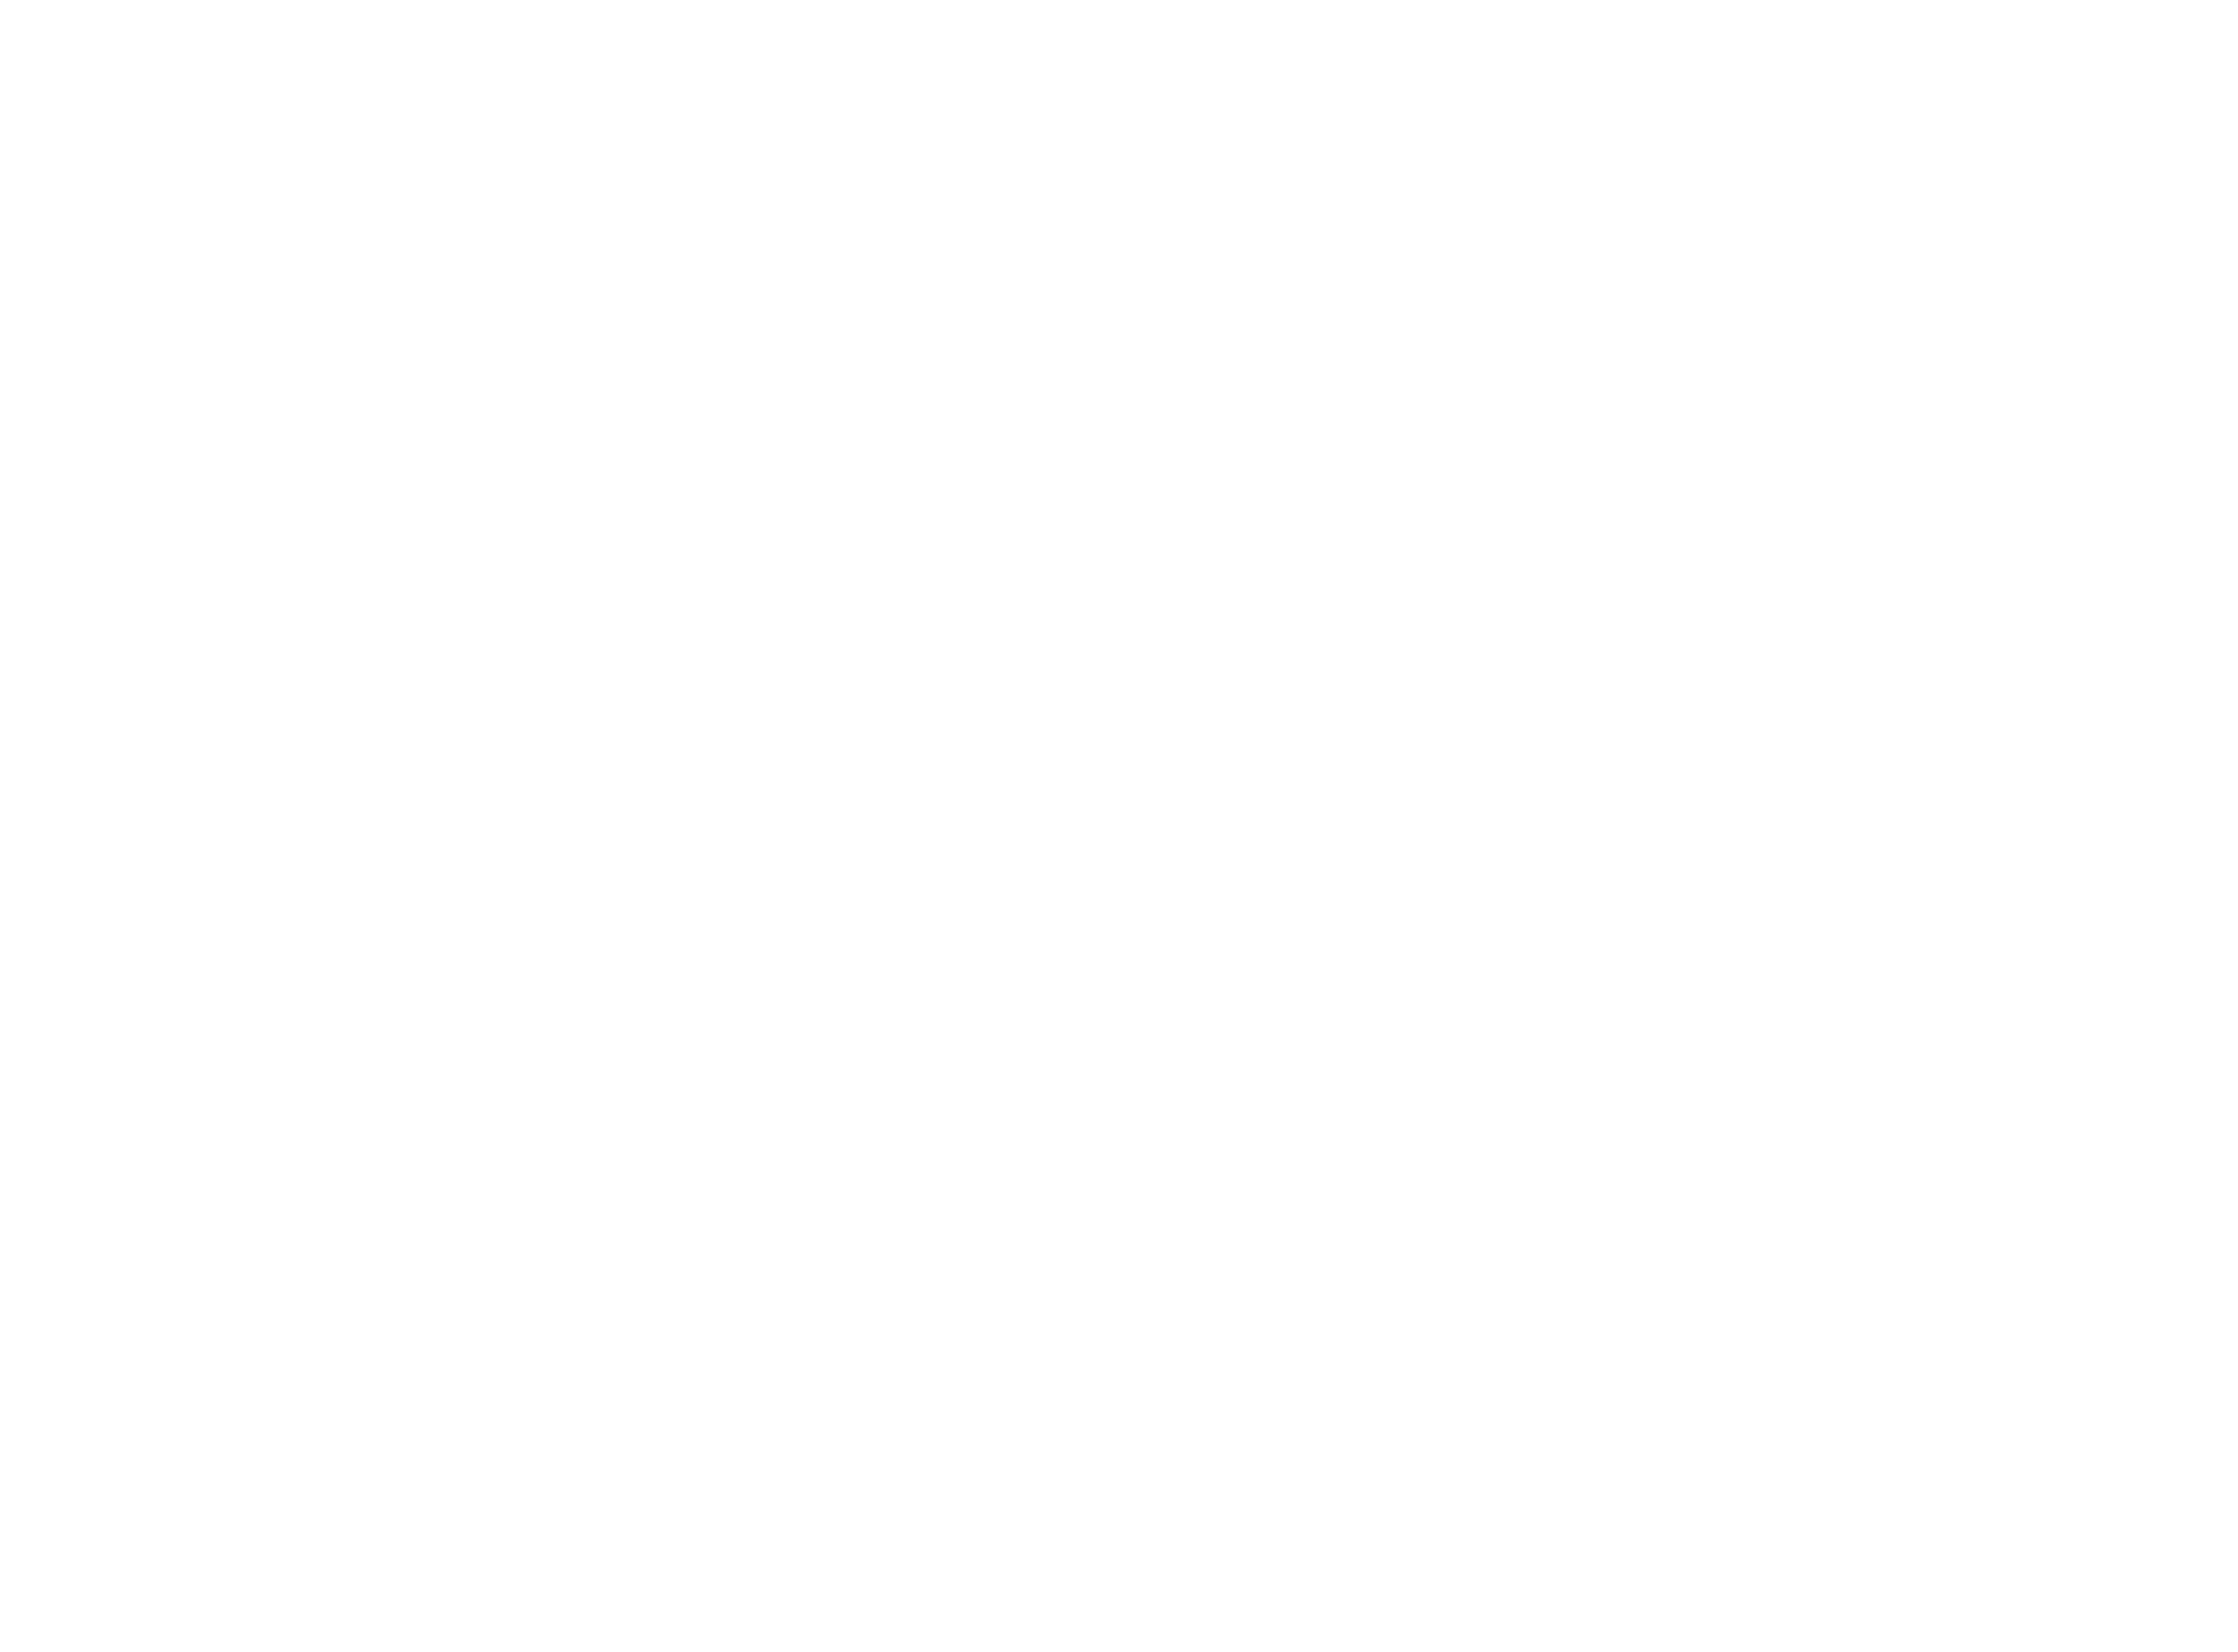 Ranch Wagon Rust Repair title